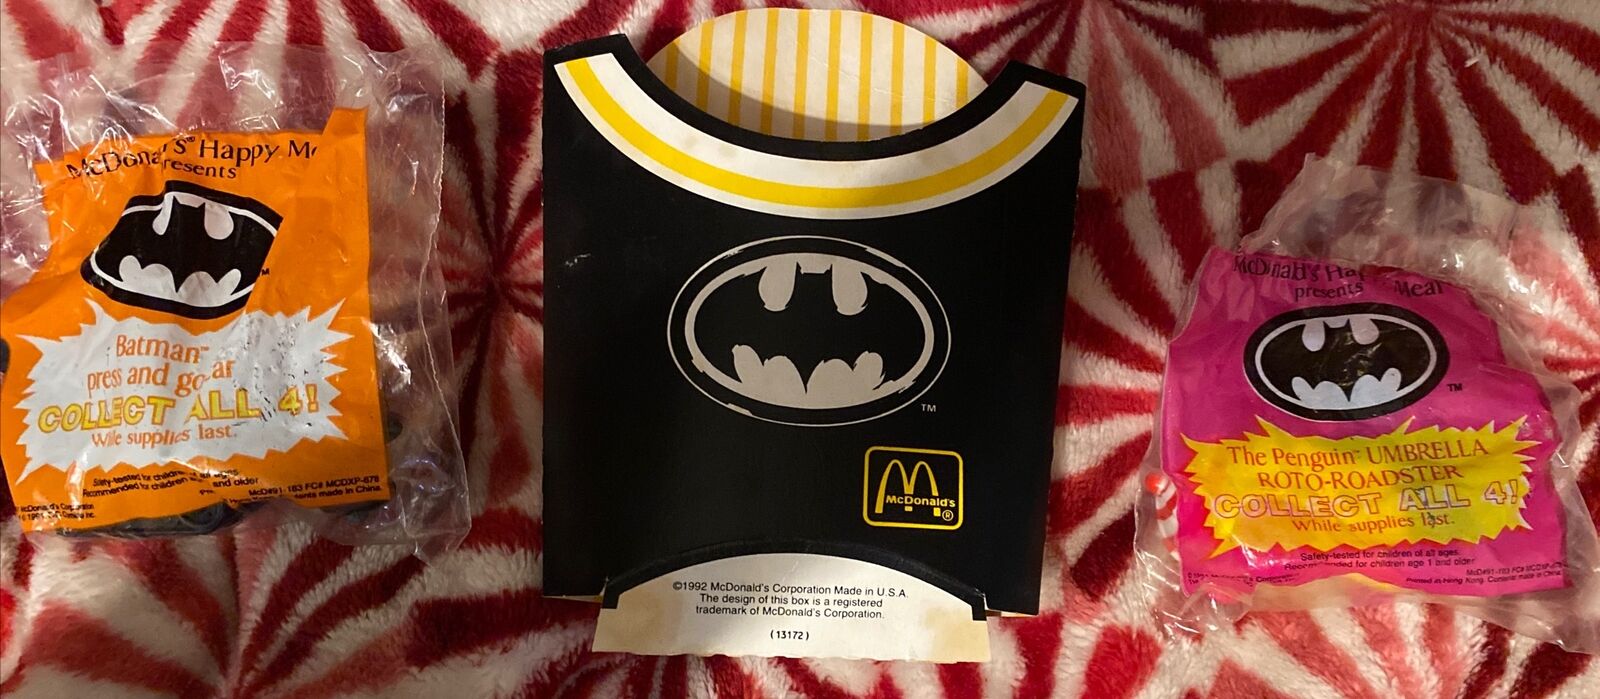 1992, McDonald\'s, BATMAN, THE PENGUIN French Fry Container +mcdonald’s toys